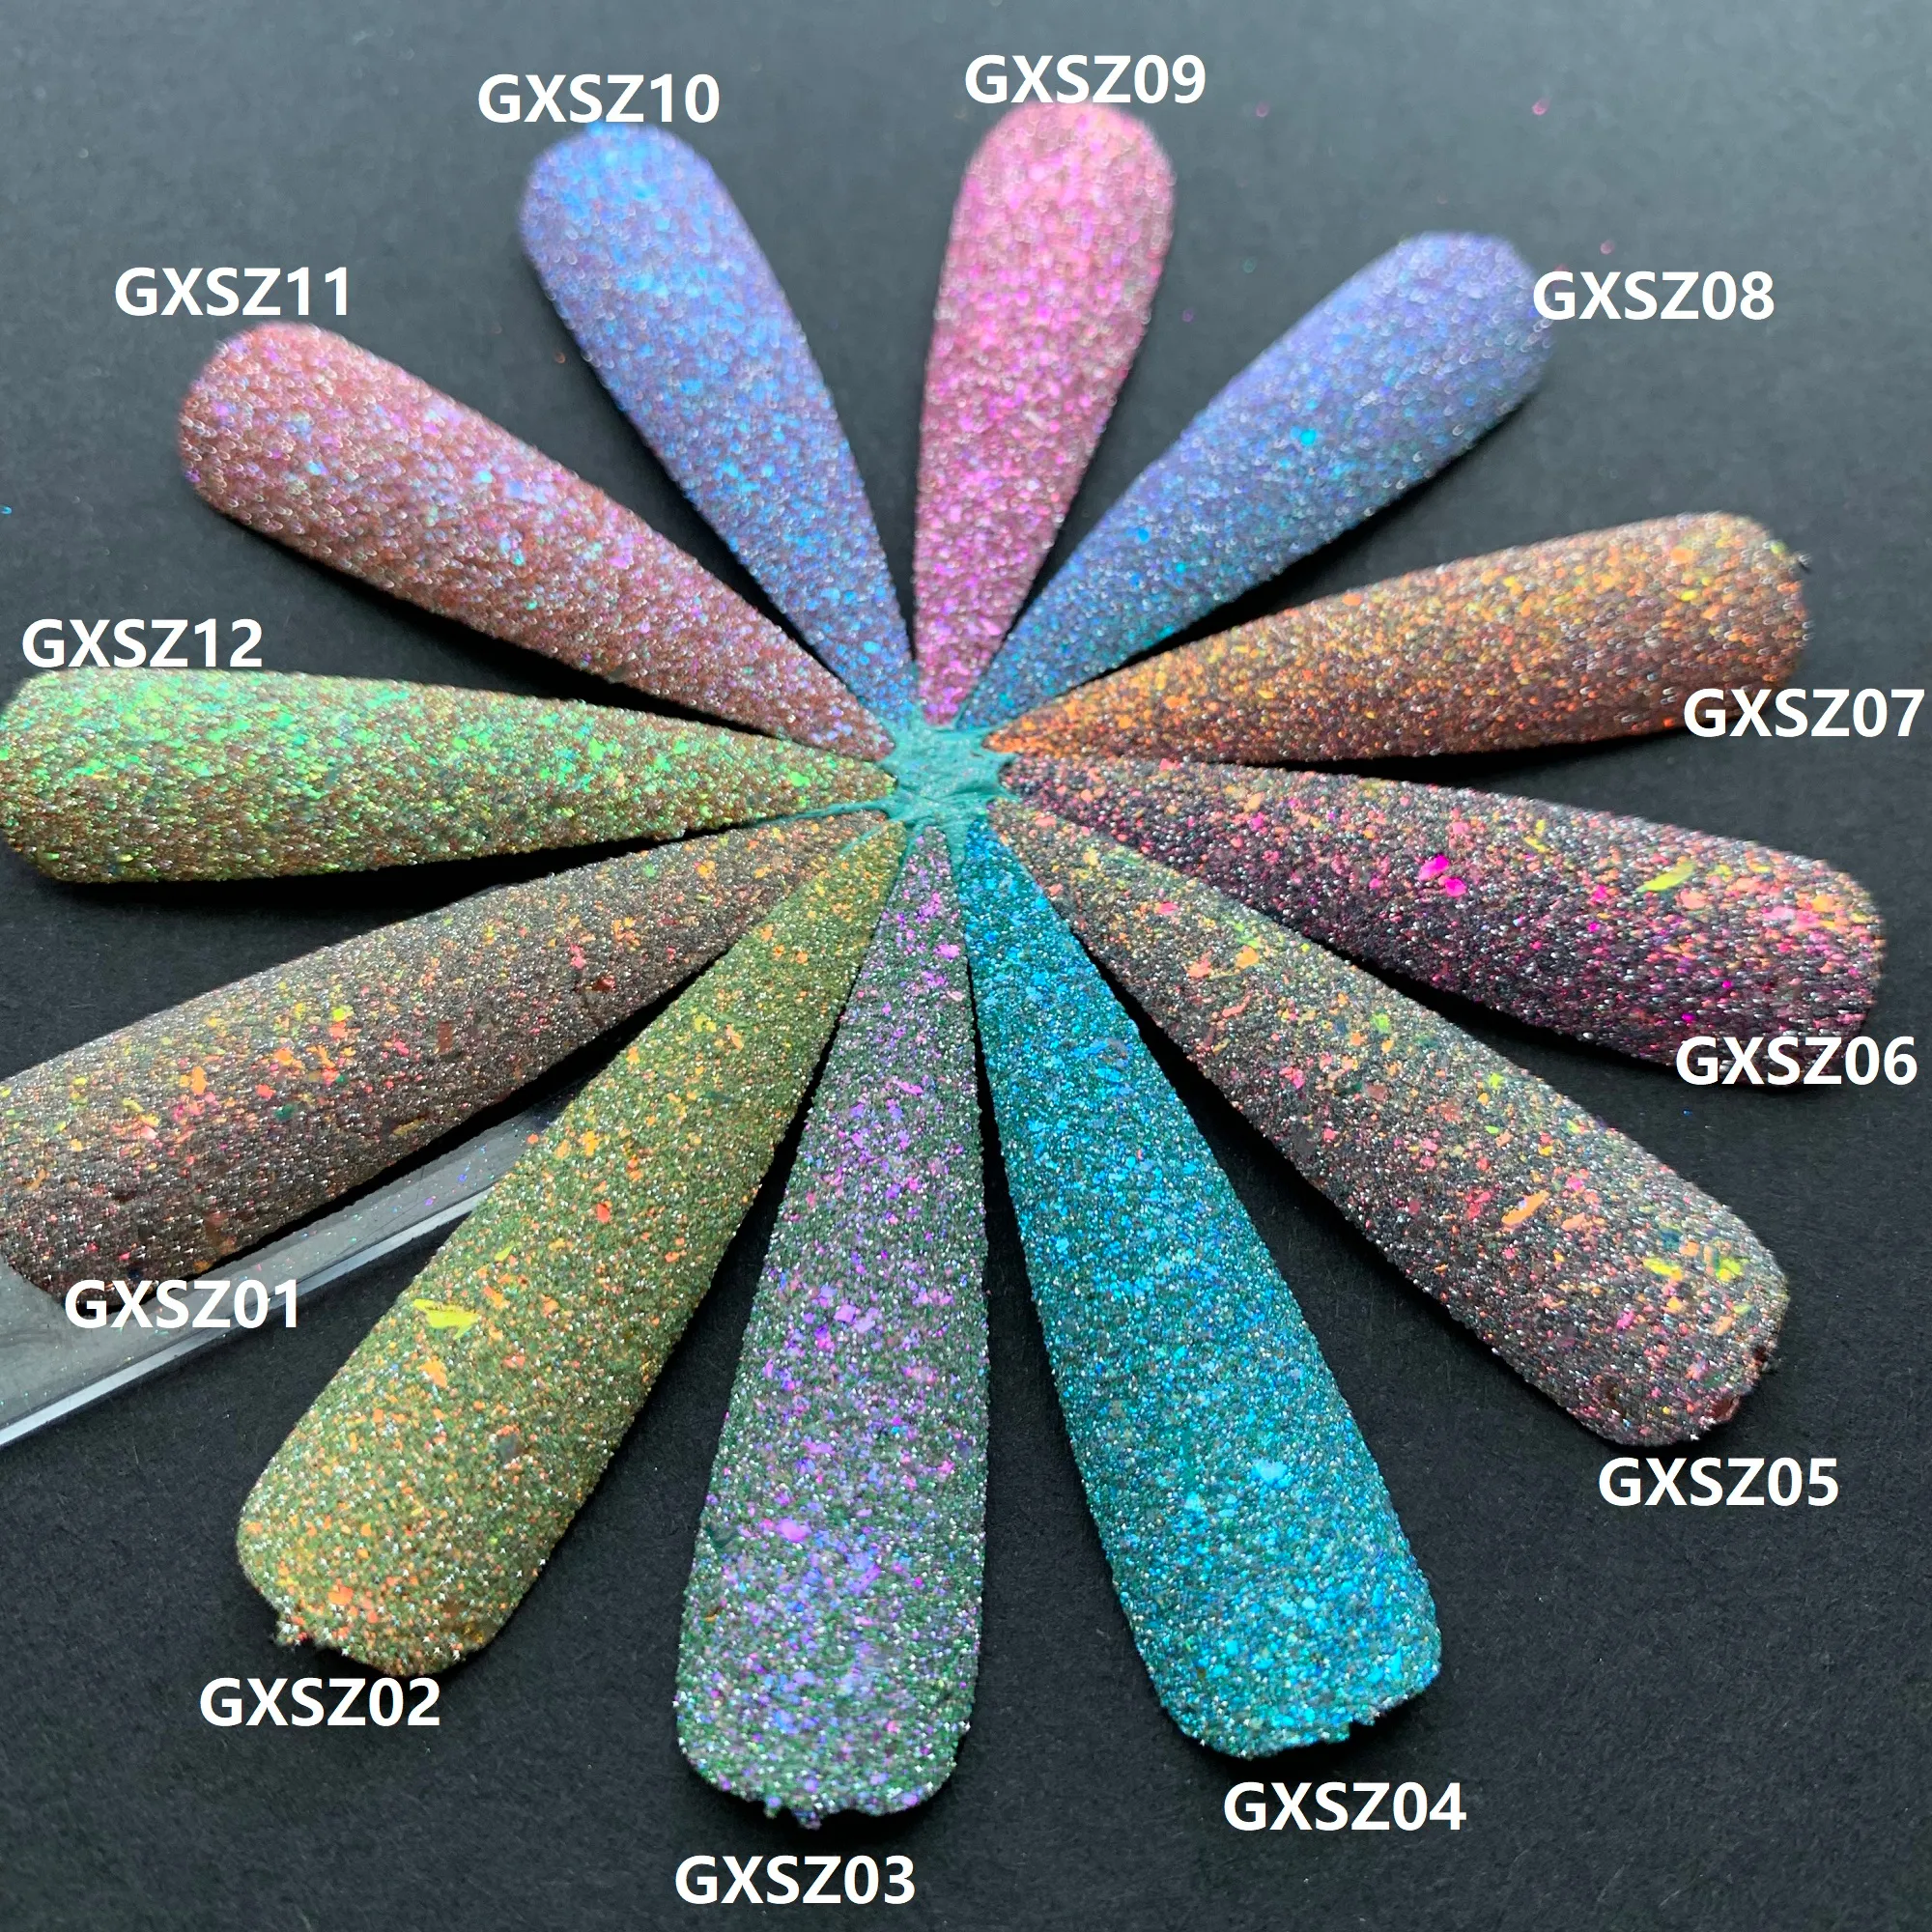 Popular Nail Art Pigmento Em Pó Chameleon Galaxy Glitter Reflexivo Brilhante Diamante Prego pó reflexivo Para Unhas